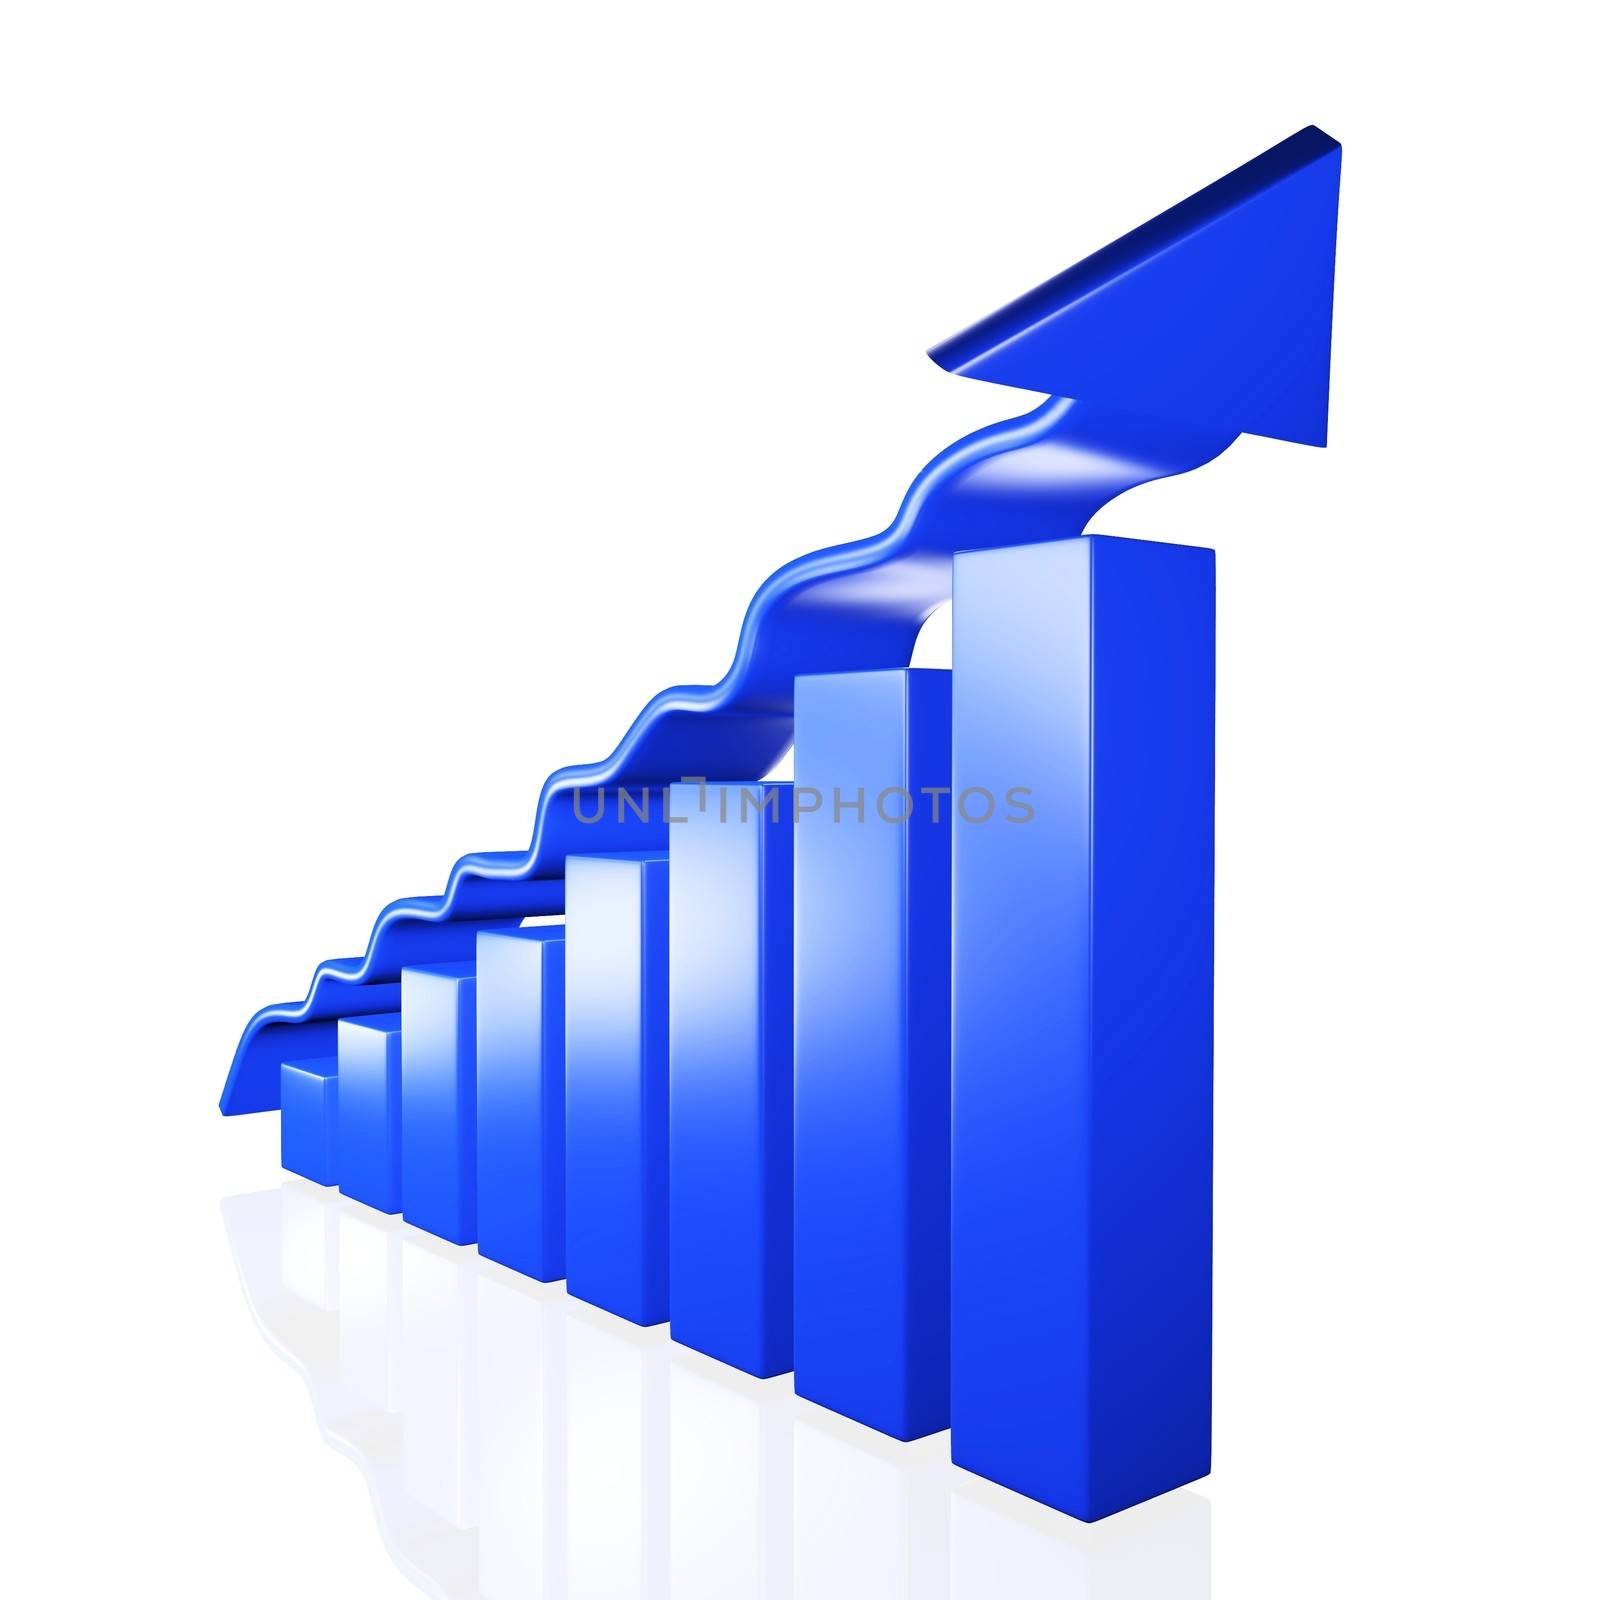 A 3d blue business or financial growth bar chart with an upward moving arrow
